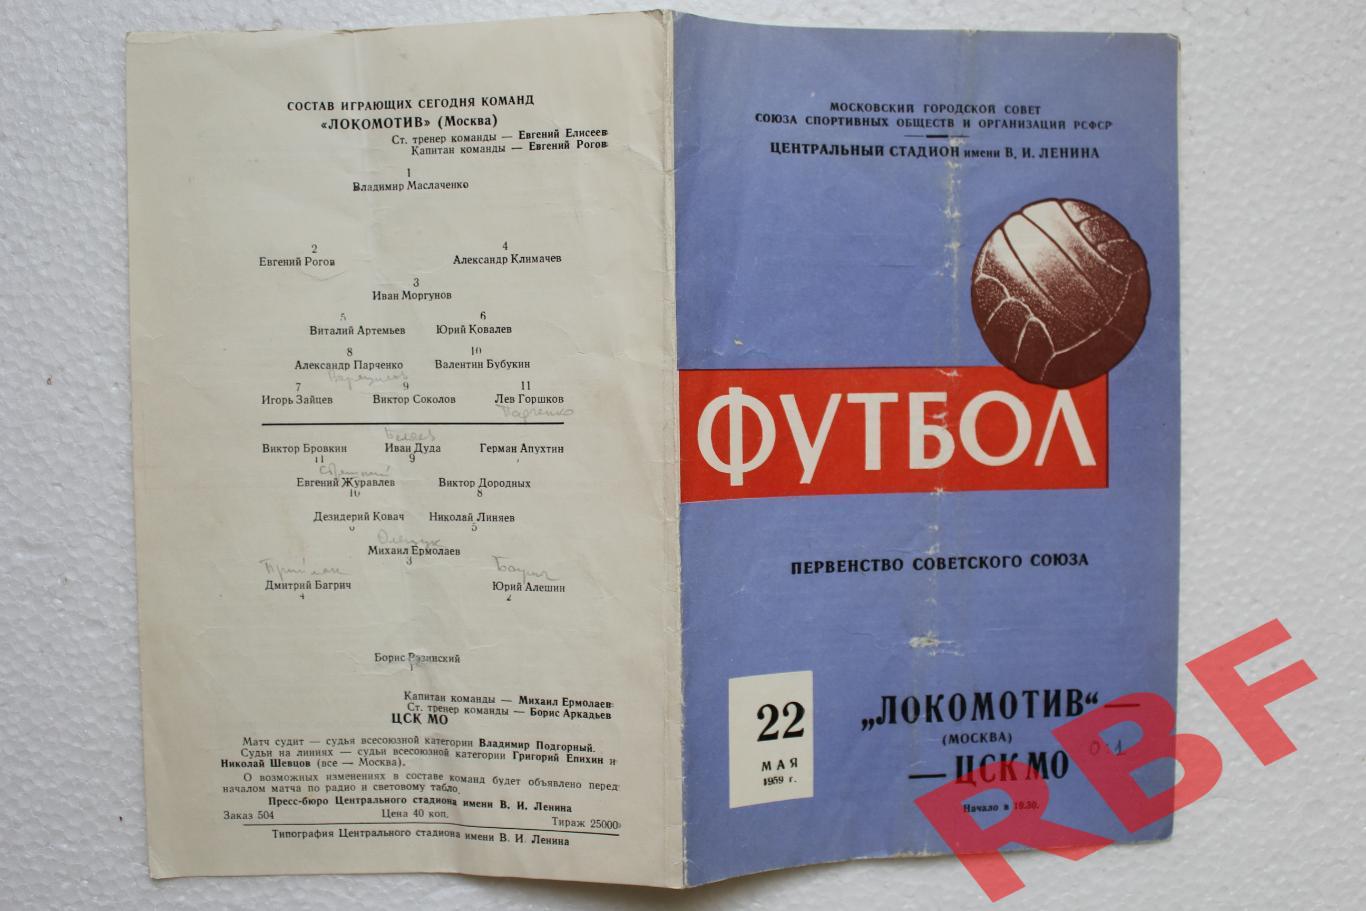 Локомотив Москва - ЦСКА МО,22 мая 1959 1